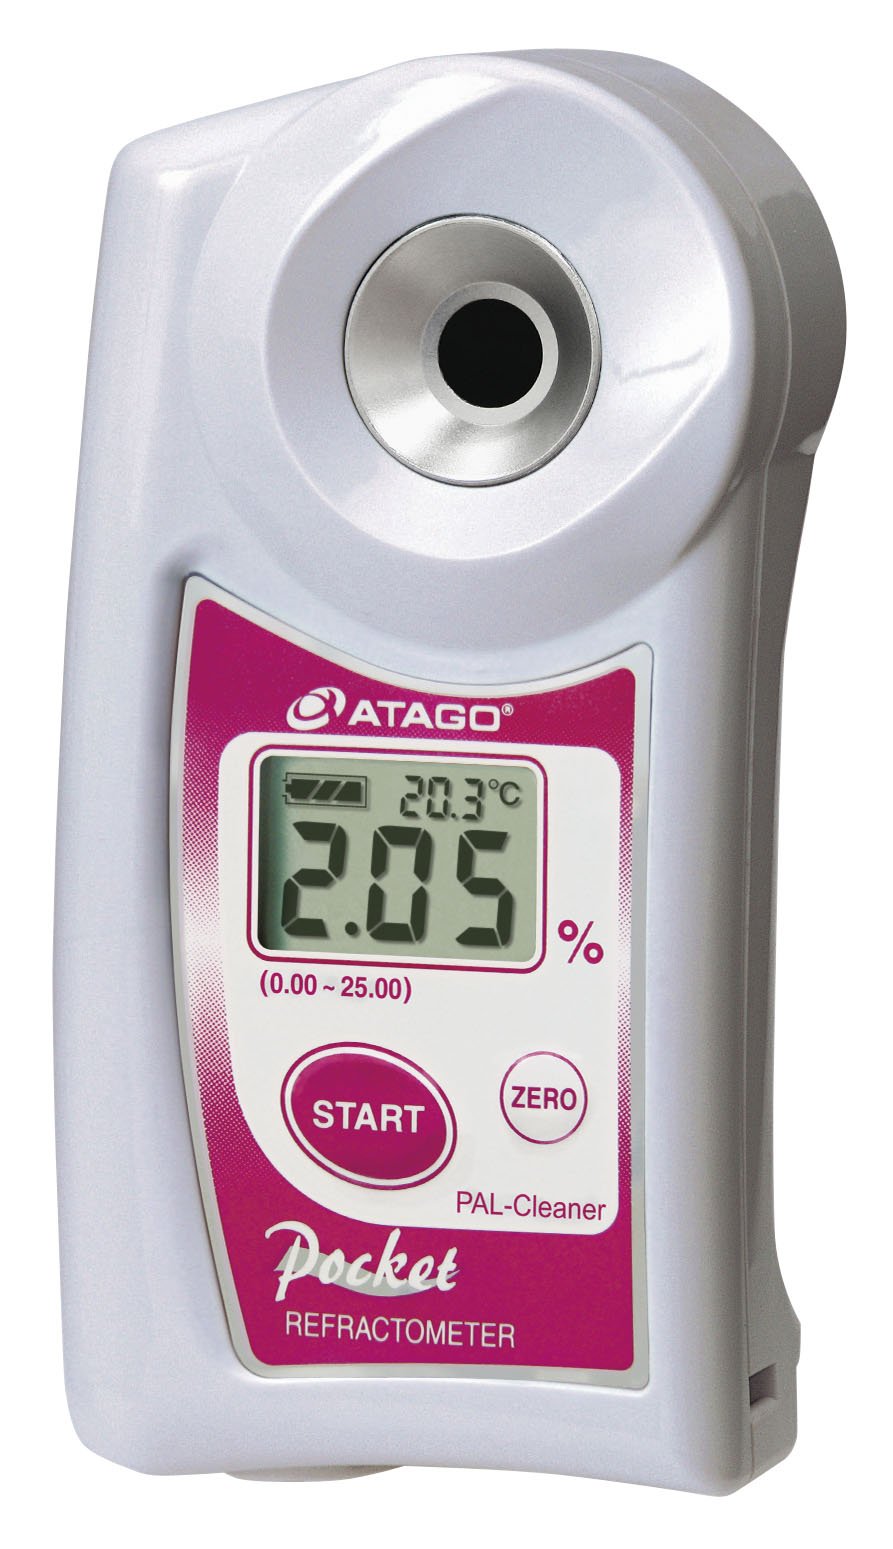 Atago 4536 Industrial Wash Solutions Refractometer, PAL-Cleaner, Cleaner : 0.00 to 25.00 Measurement Range